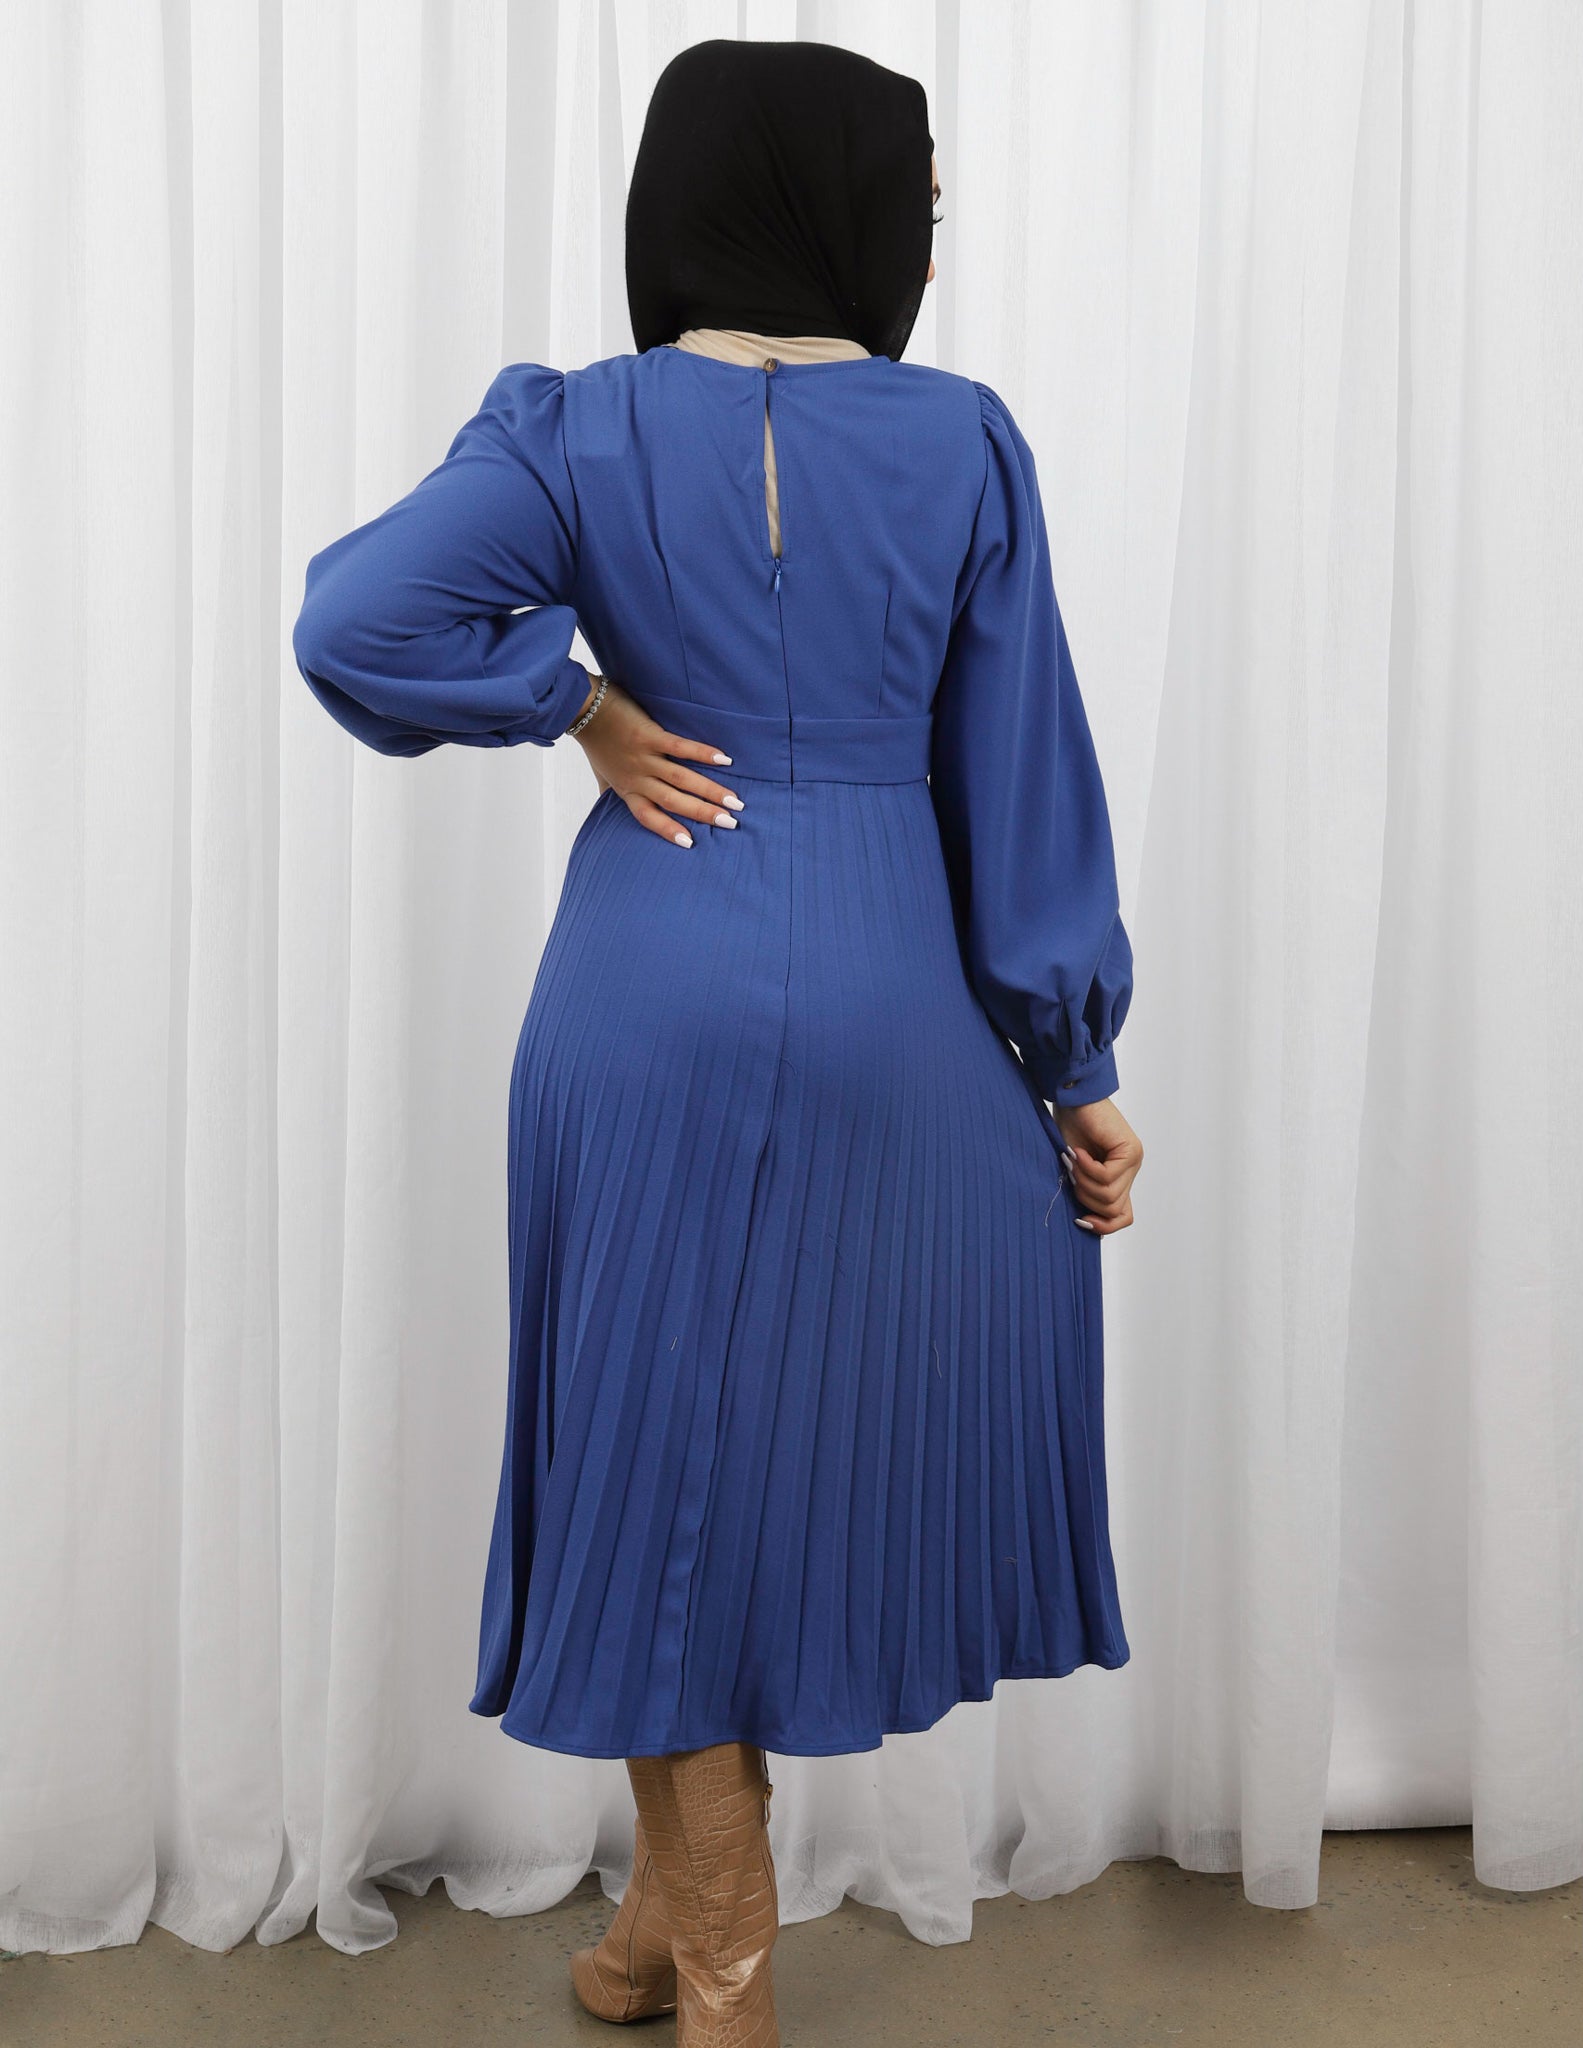 WG31220014-2-BLU-dress